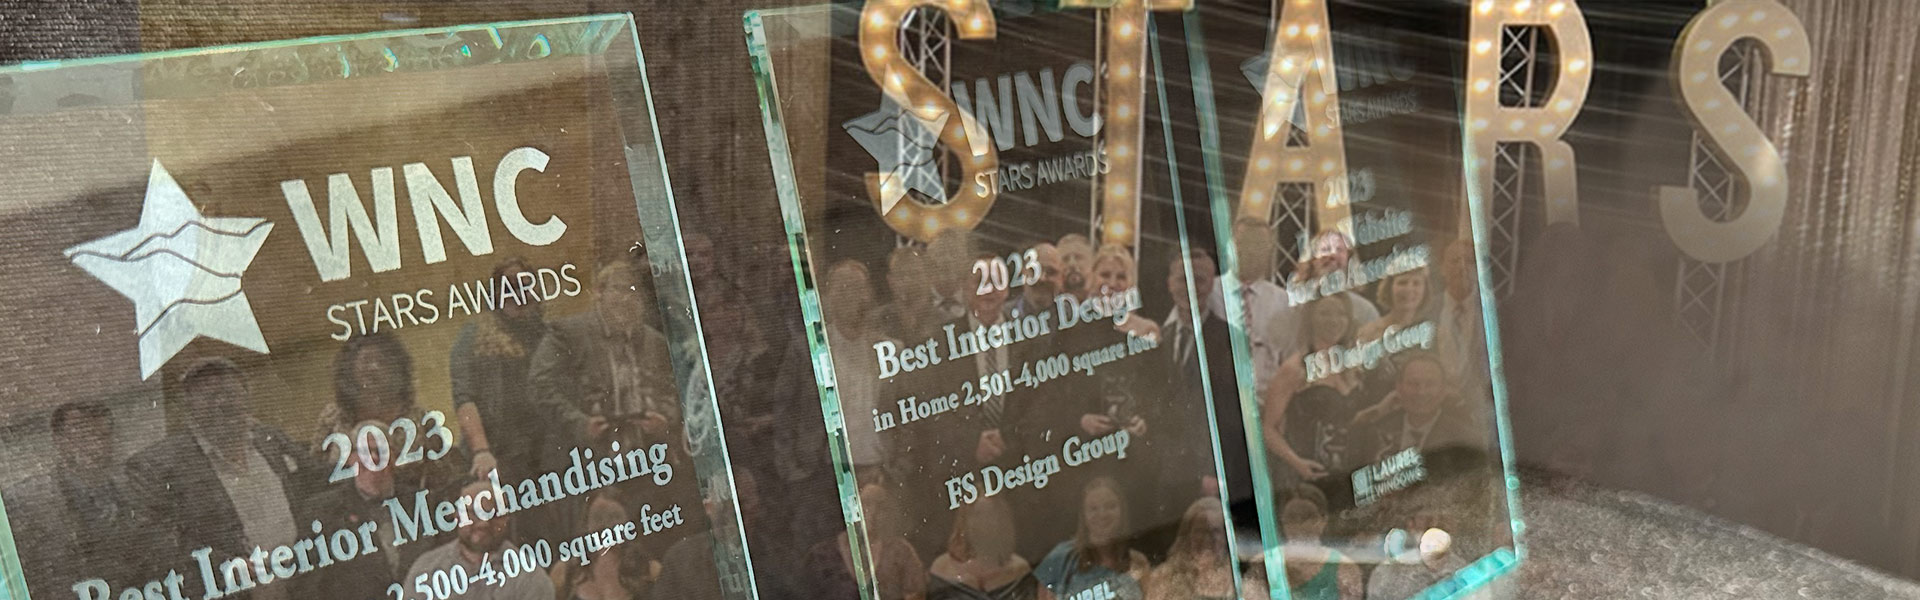 Asheville Interior Design Awards Gala - 2023 WNC STARS